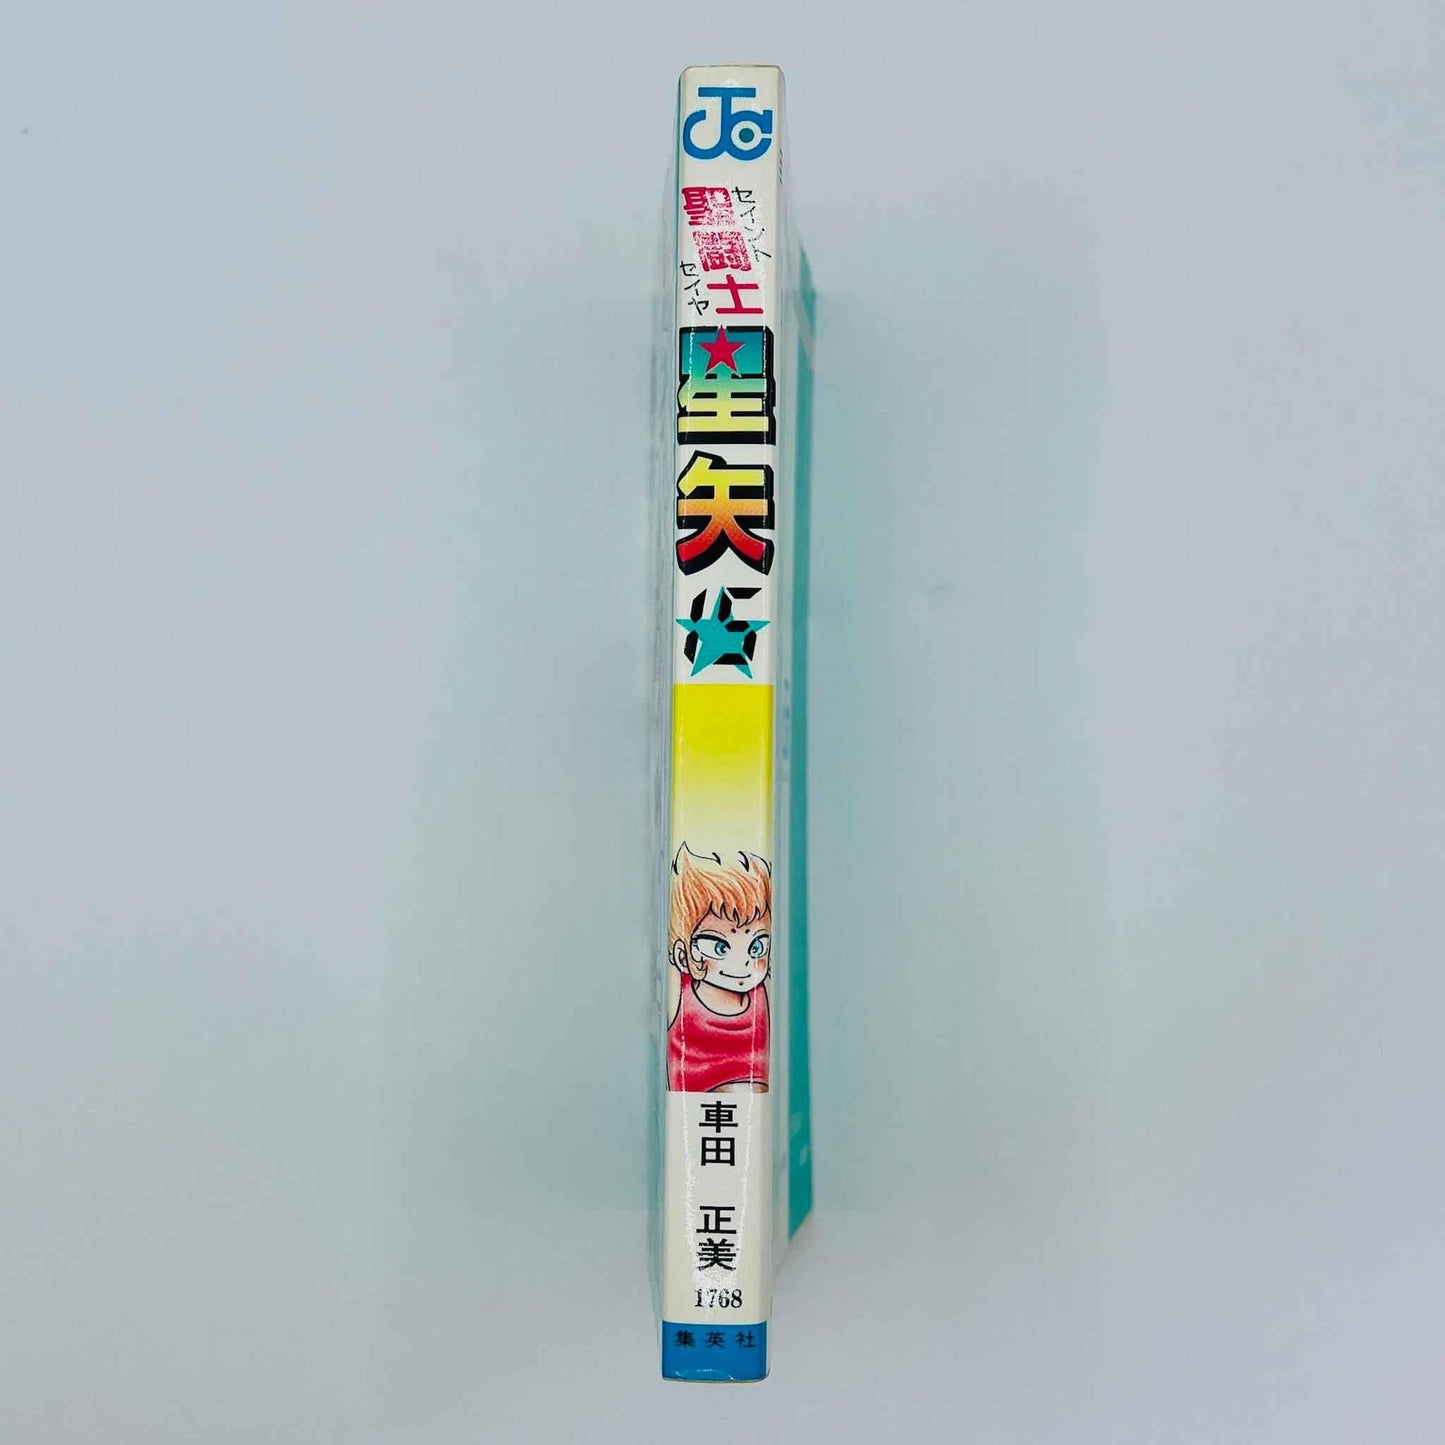 Saint Seiya - Volume 15 - 1stPrint.net - 1st First Print Edition Manga Store - M-SS-15-001